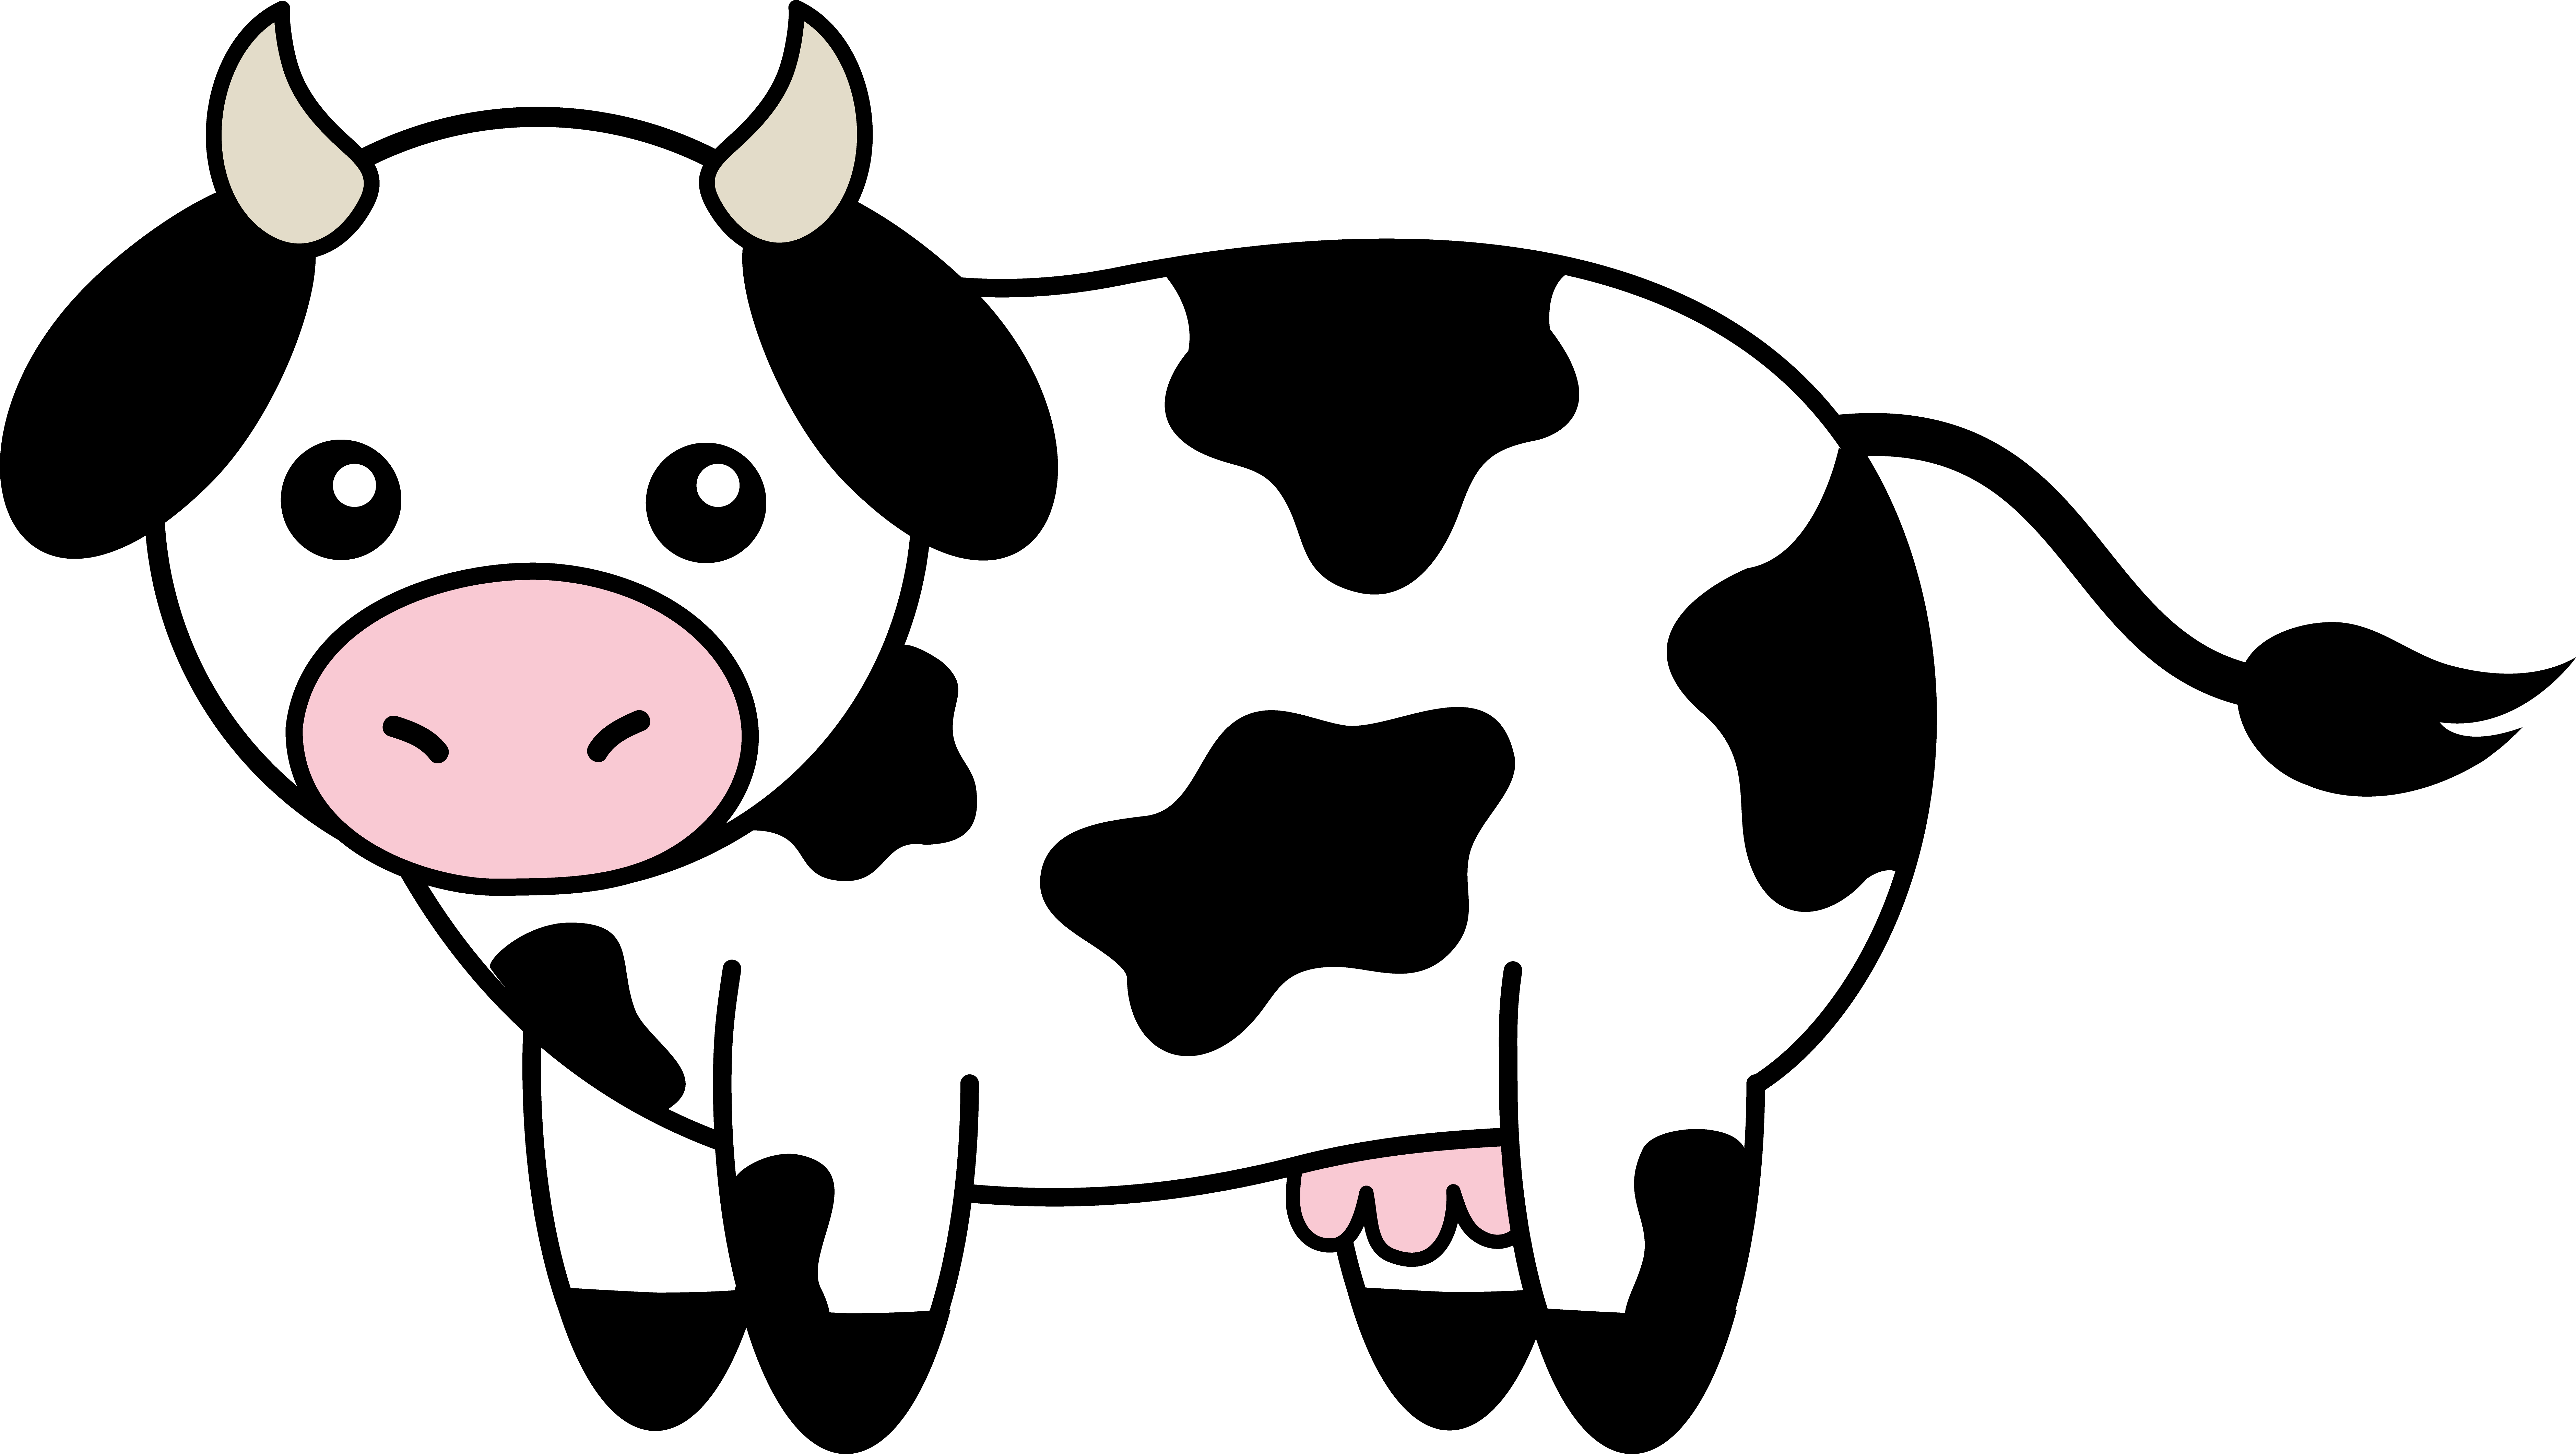 Clipart cow face. Cartoons wallpaper brown p